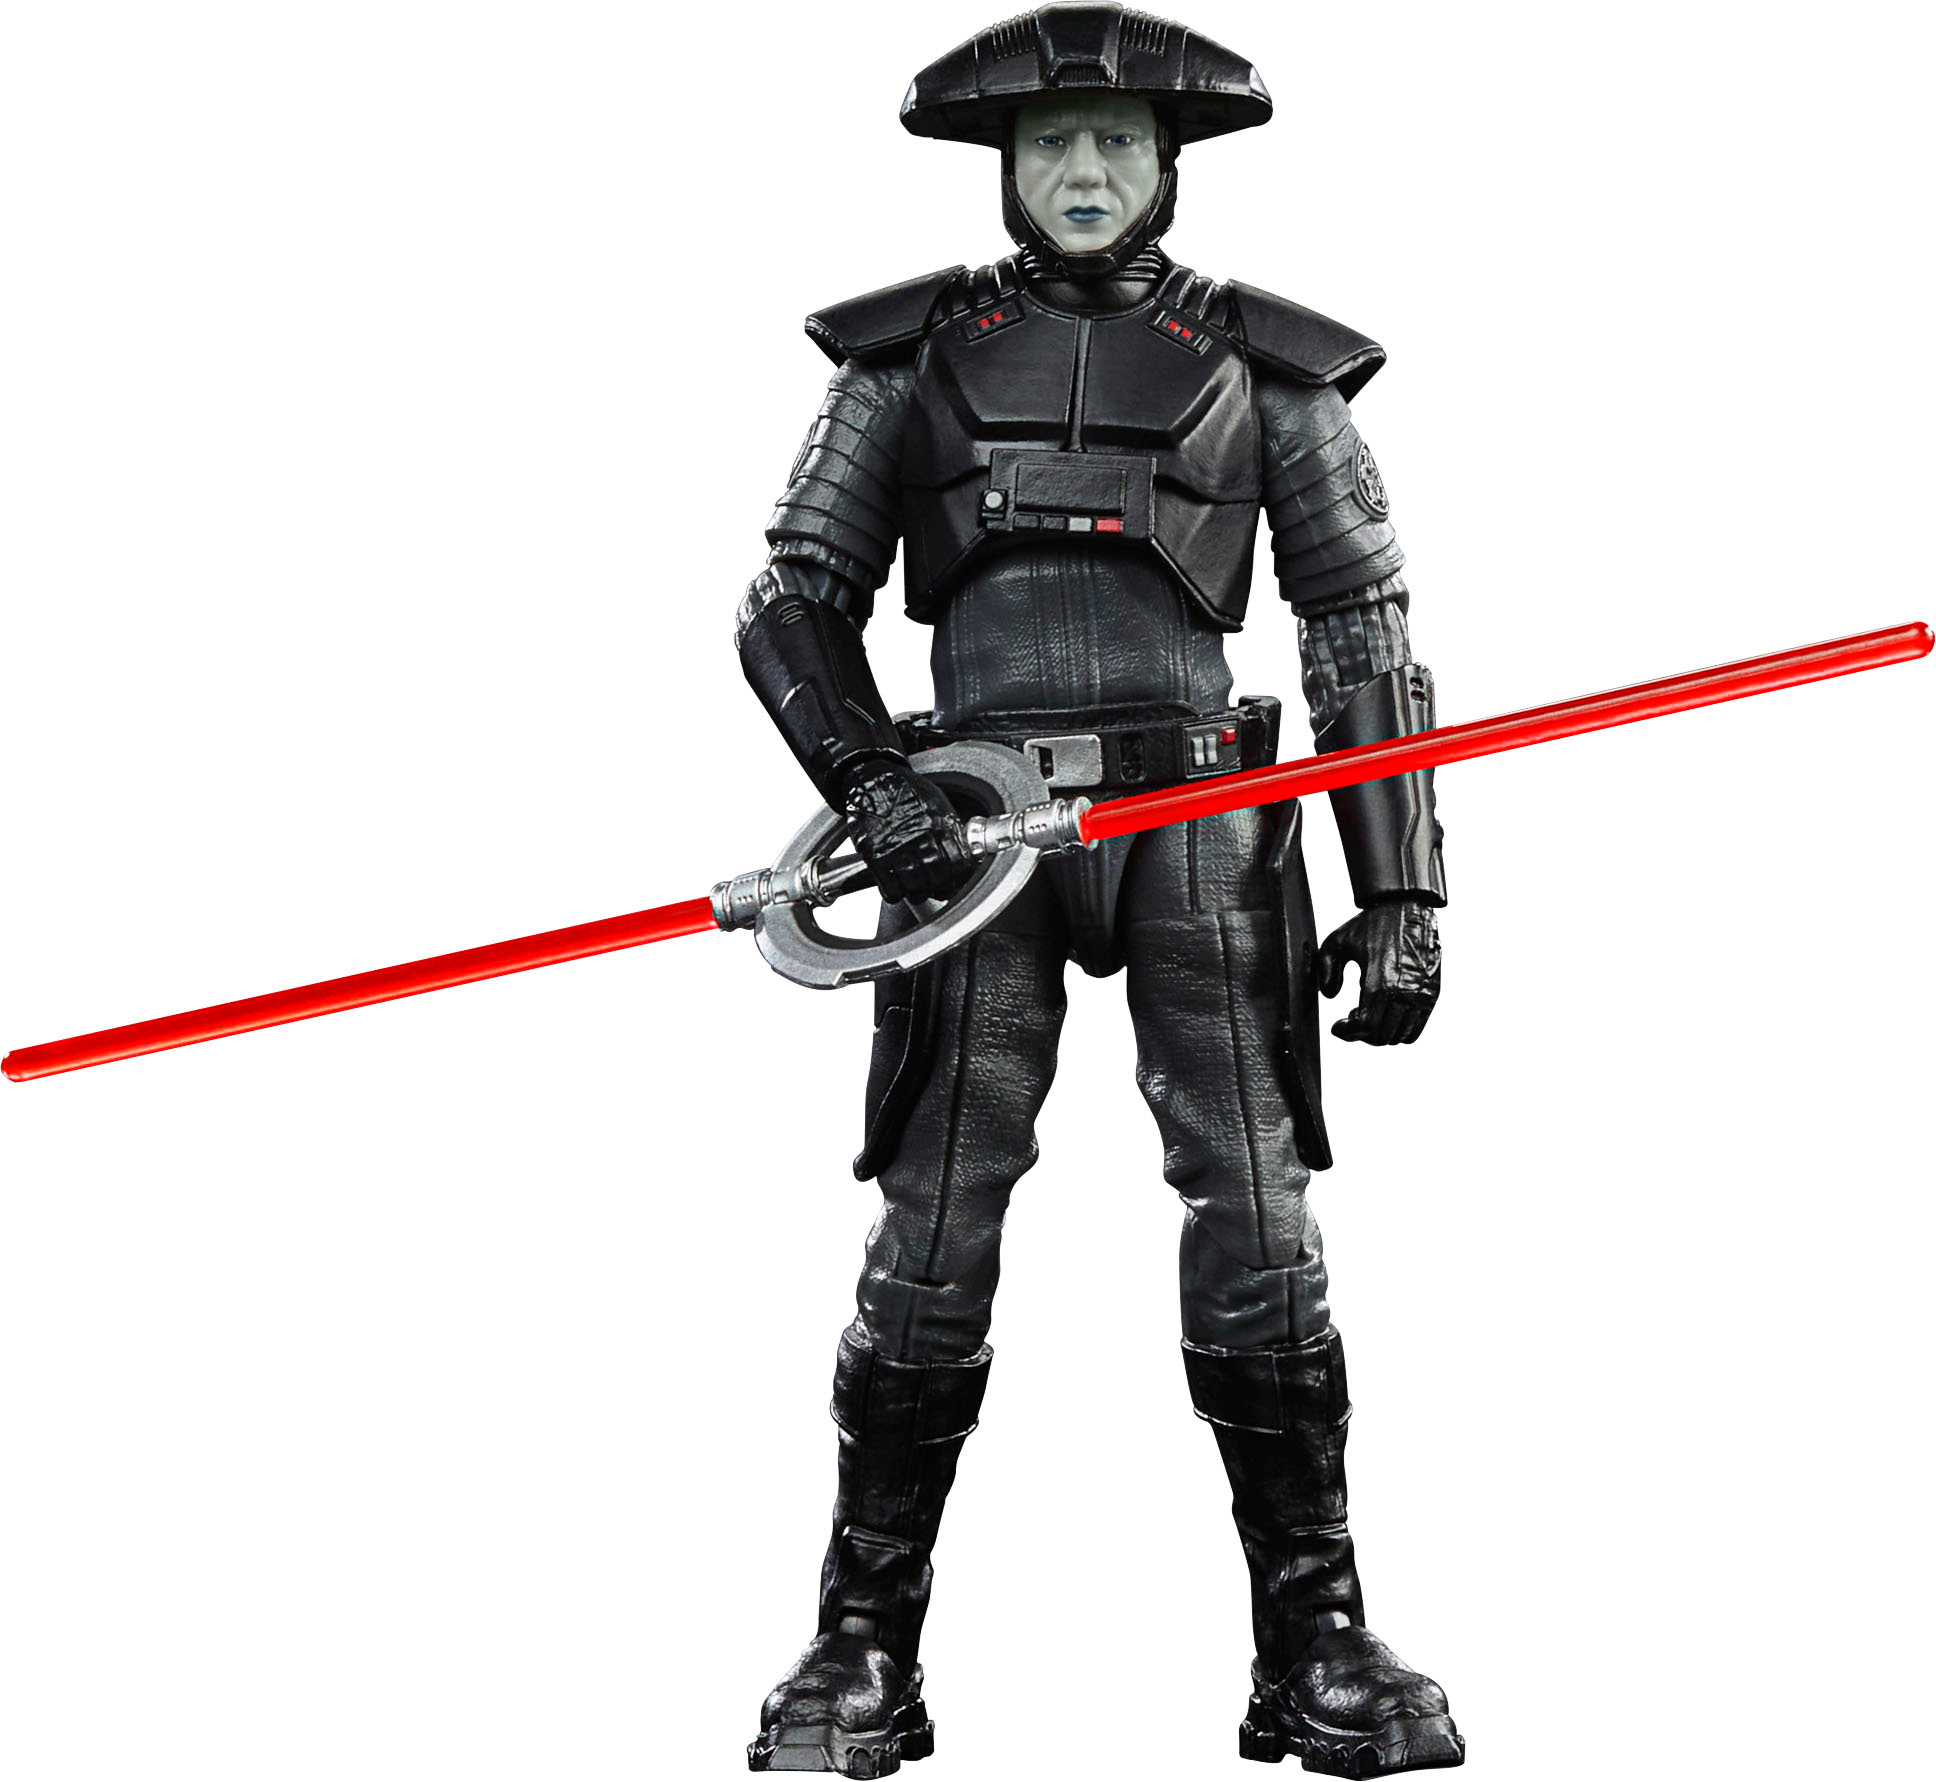 Obi-Wan Kenobi Fifth Brother Inquisitor Black Series Figure 3